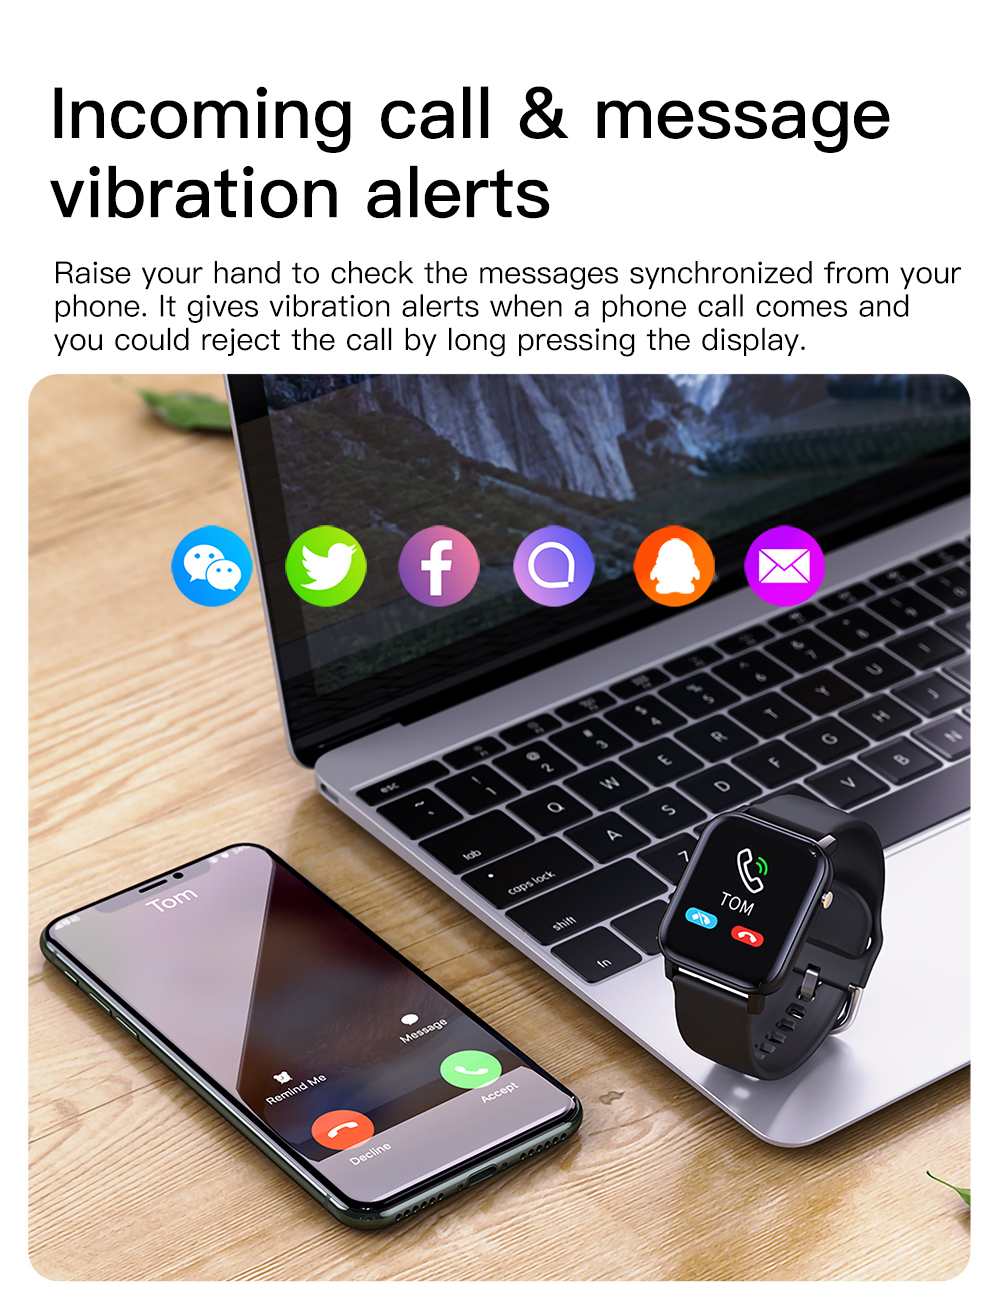 Kospet GTO Smart Watch Incoming call & message vibration alerts